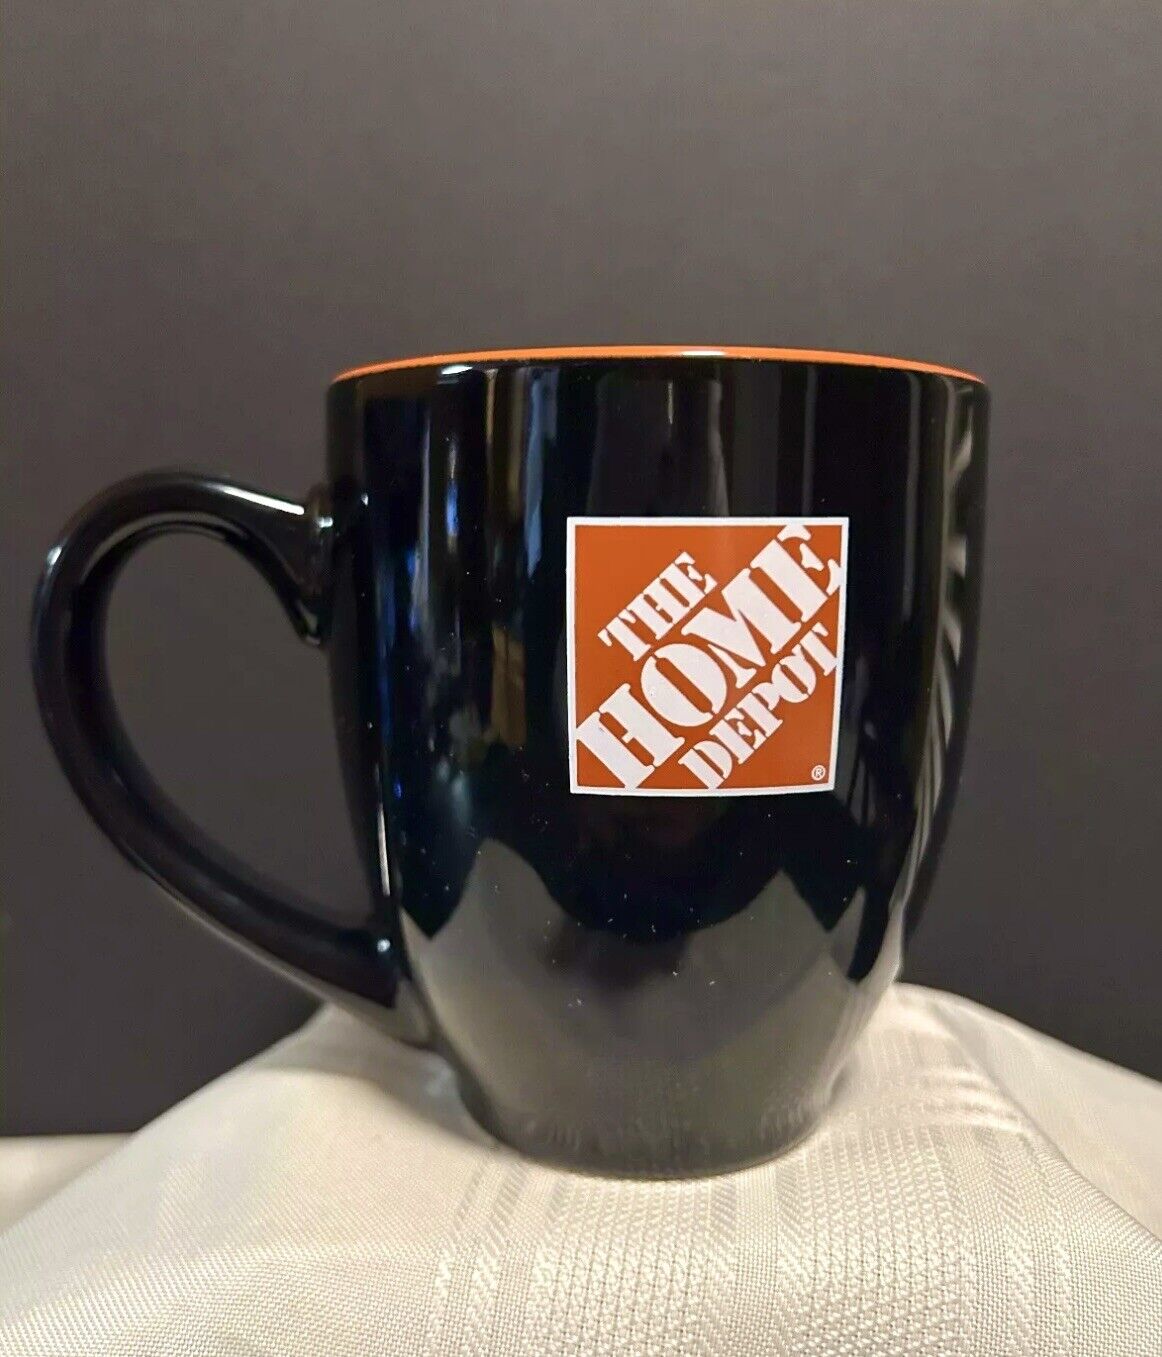 The Home Depot Black/Orange Coffee Cup Mug